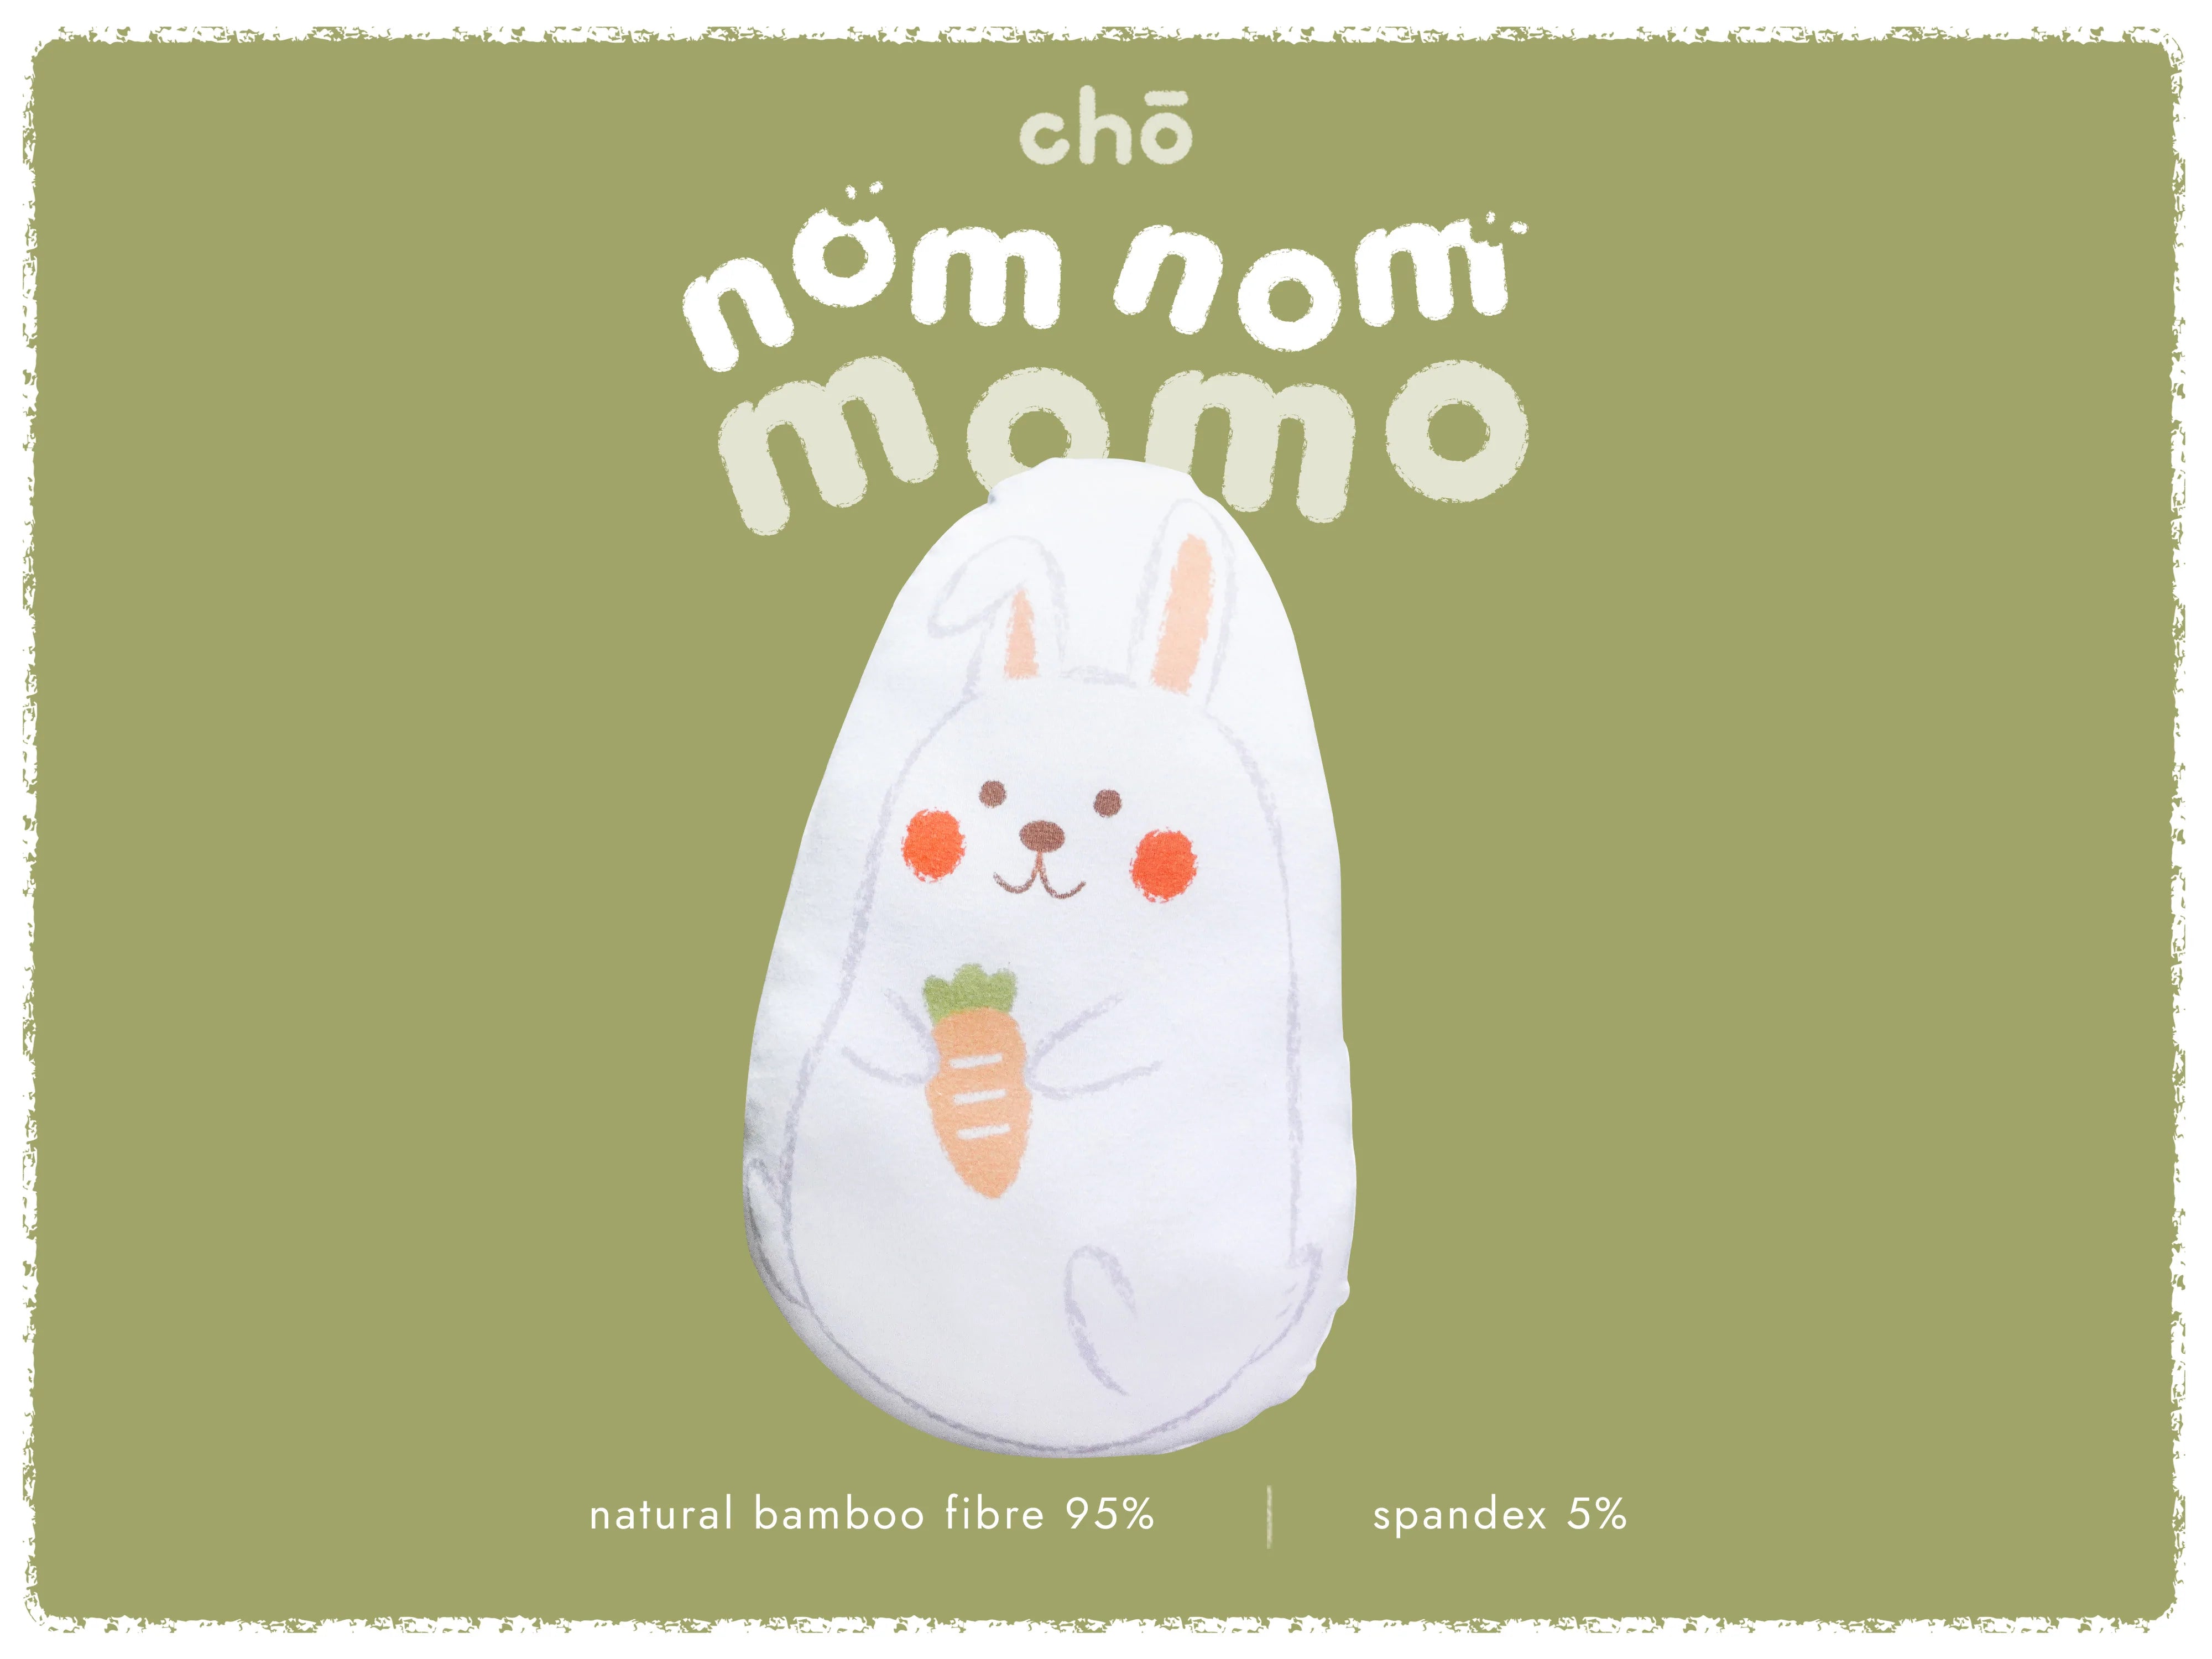 Cho Snuggy Plushie Bundle (Farmer Momo & Nom Nom Momo)